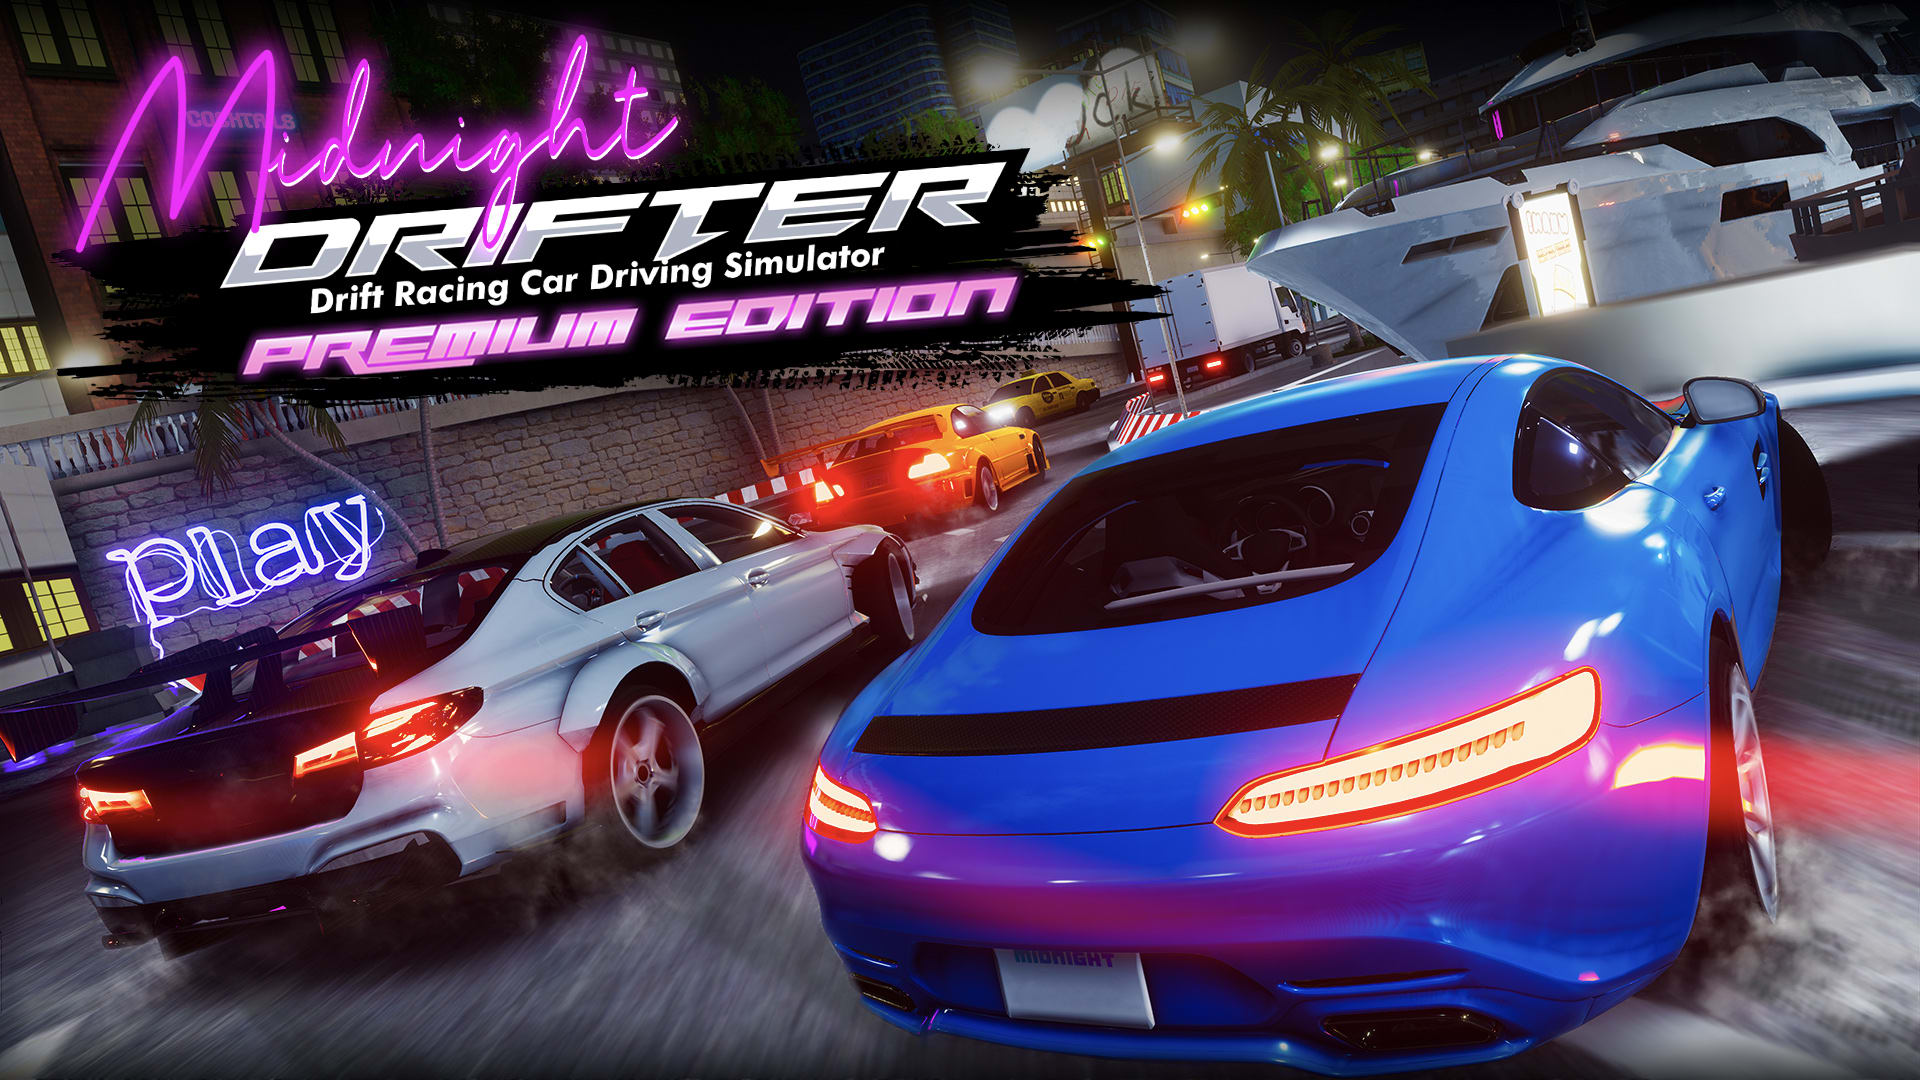 Midnight Drifter-Drift Racing Car Racing Driving Simulator - PREMIUM EDITION